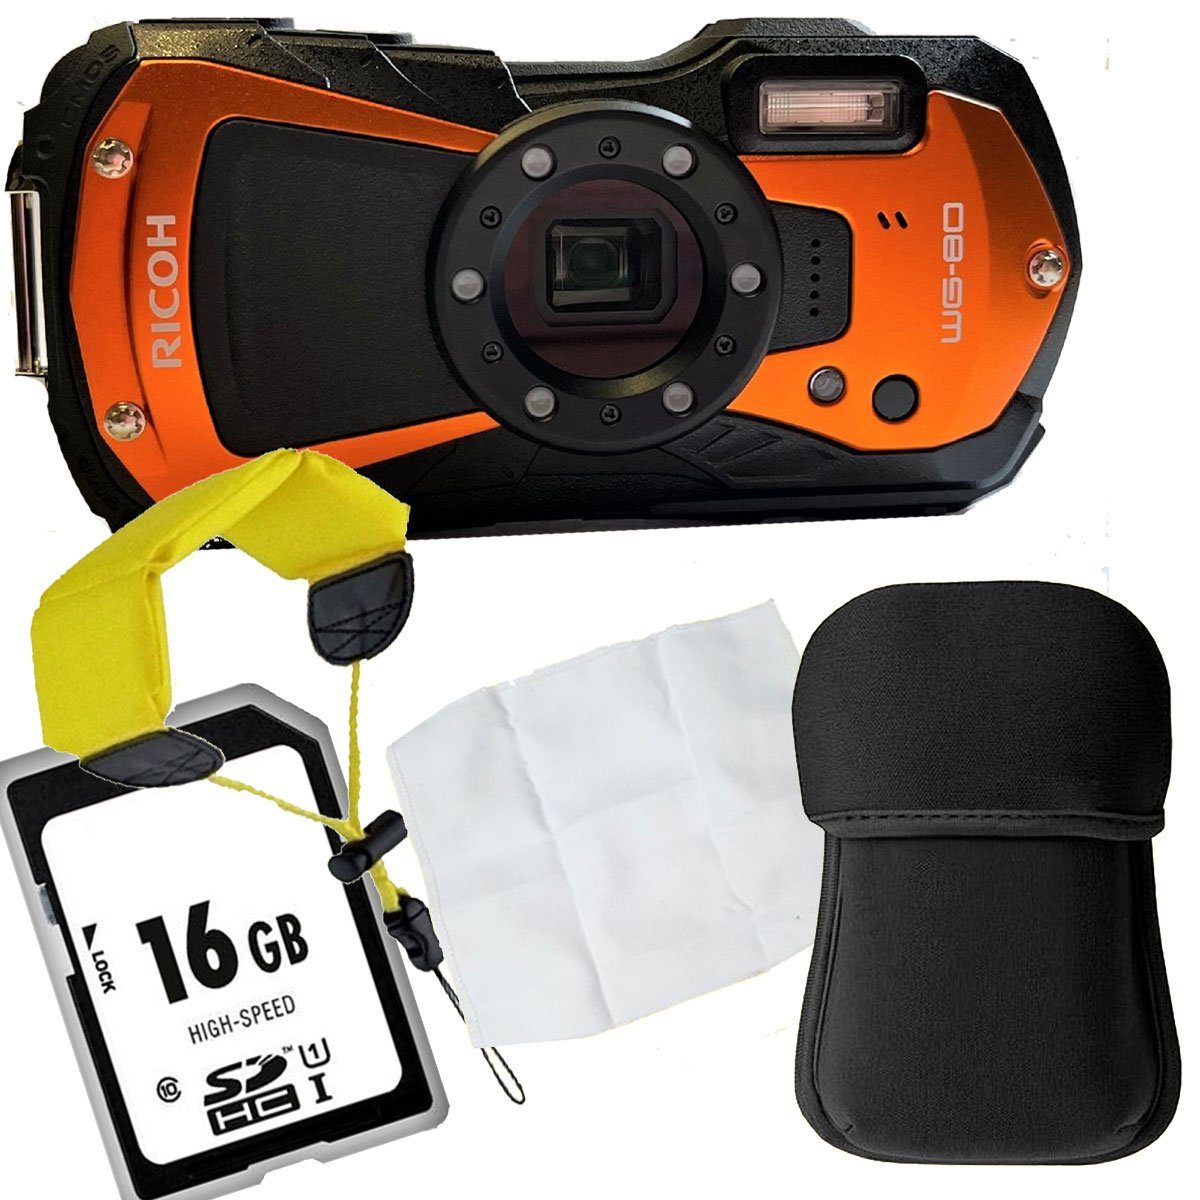 WG-80 Set Ricoh Ricoh Angebot orange Kompaktkamera